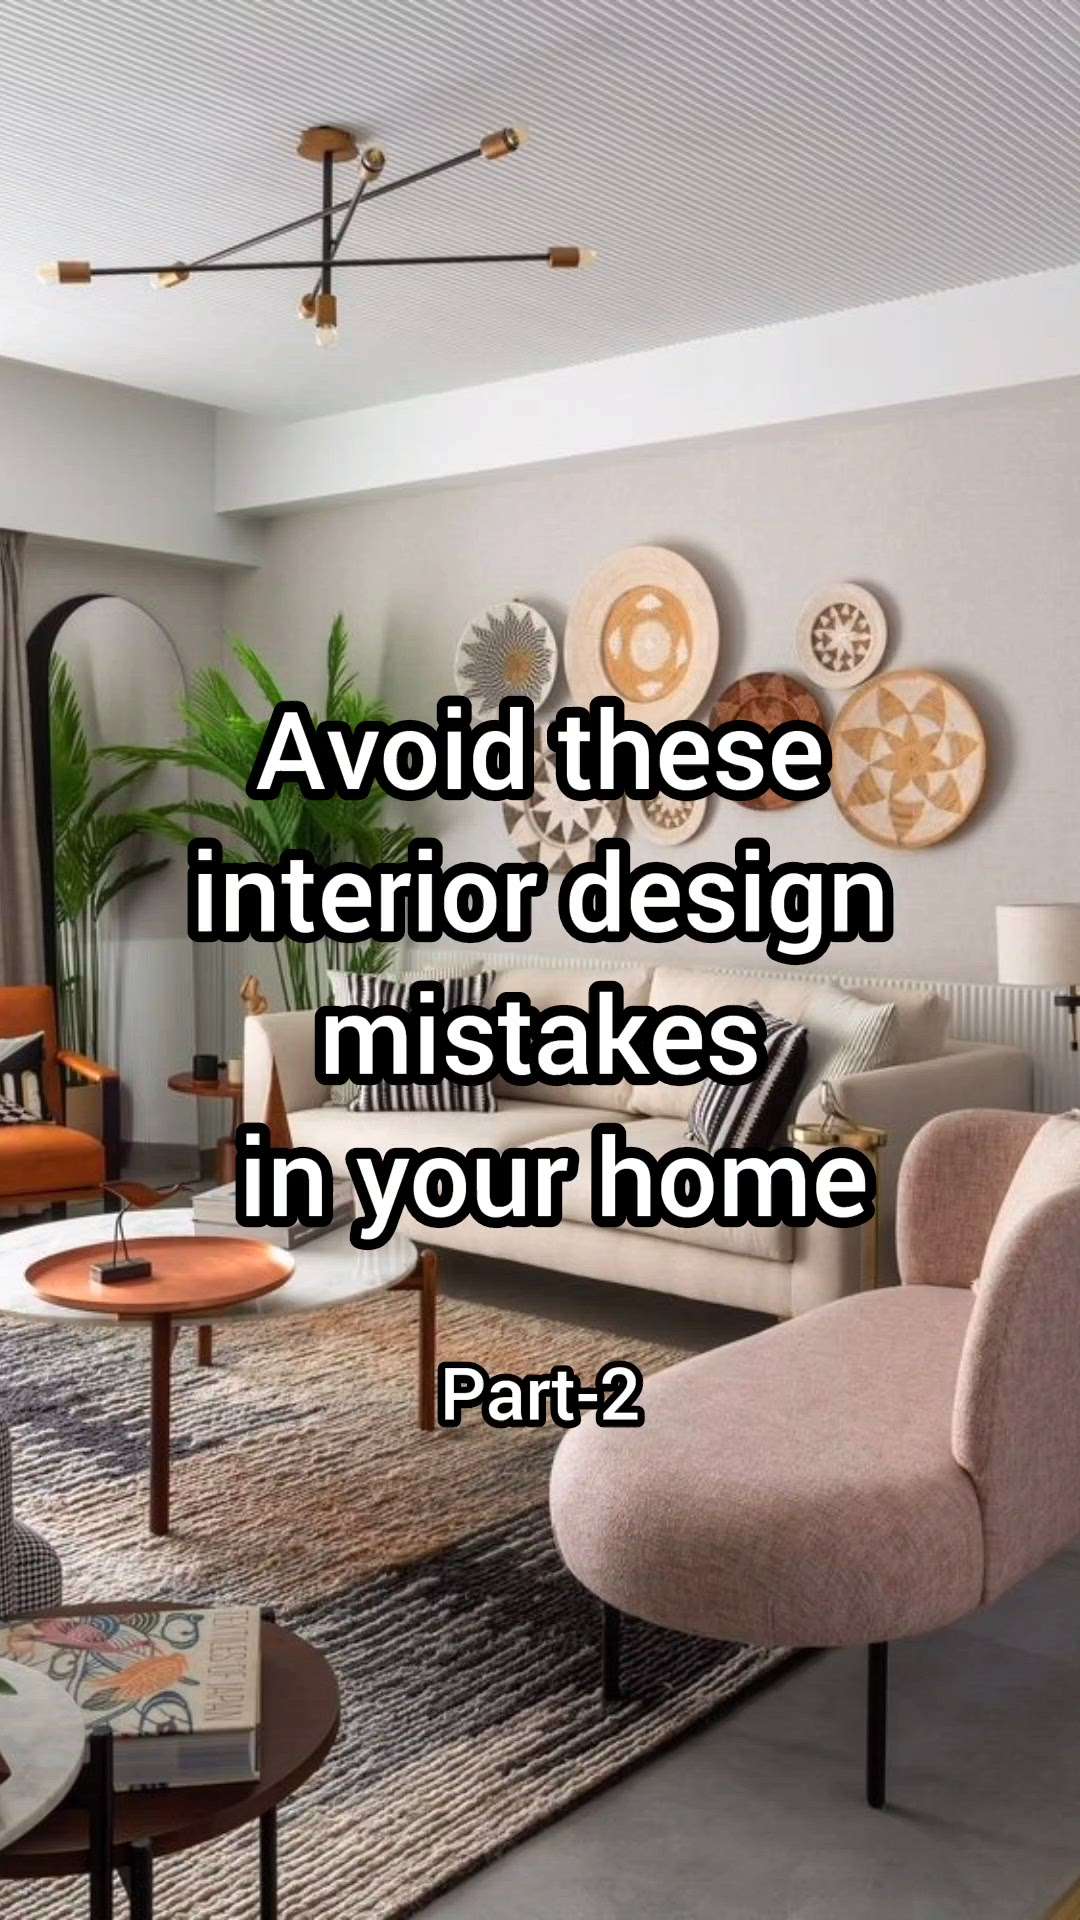 Avoid these mistake while making your home interior

#creatorsofkolo #avoid #design #interiordesign #interior #mistakes